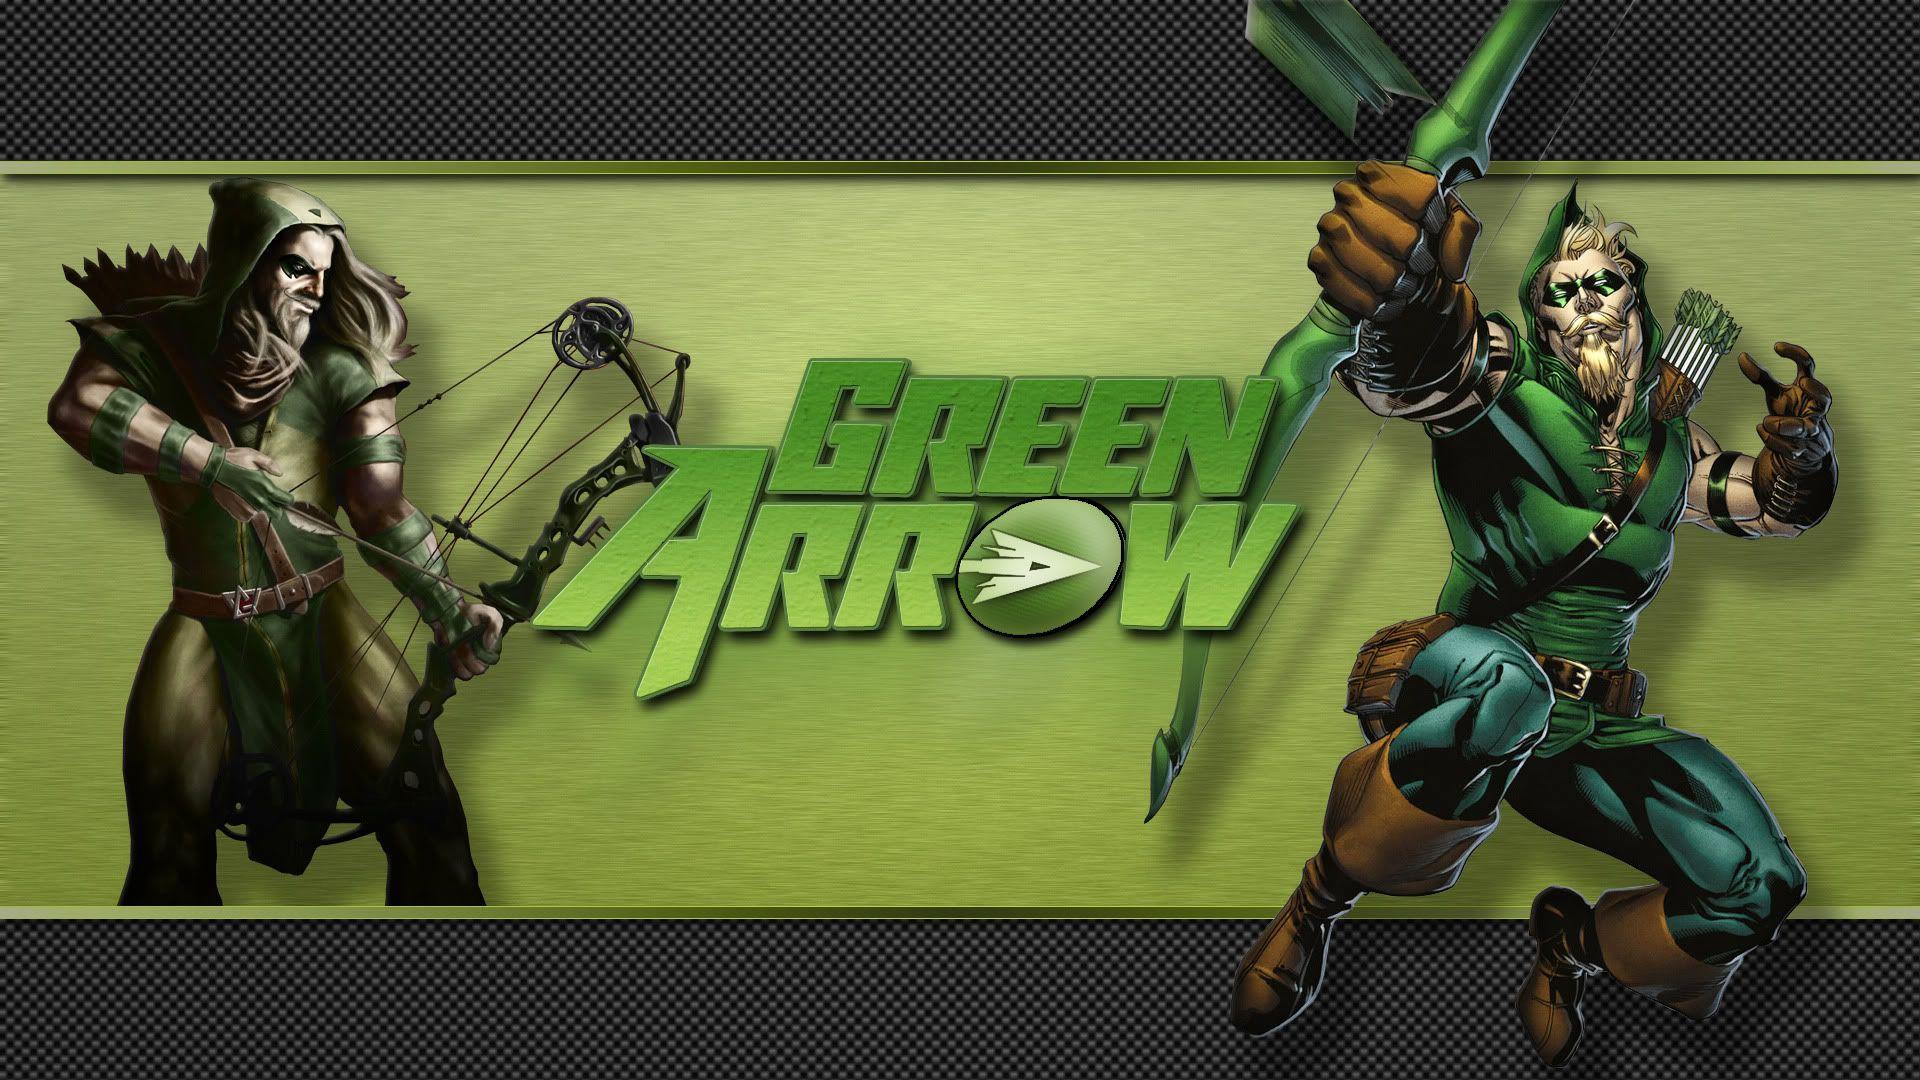 image For > Green Arrow Wallpaper HD